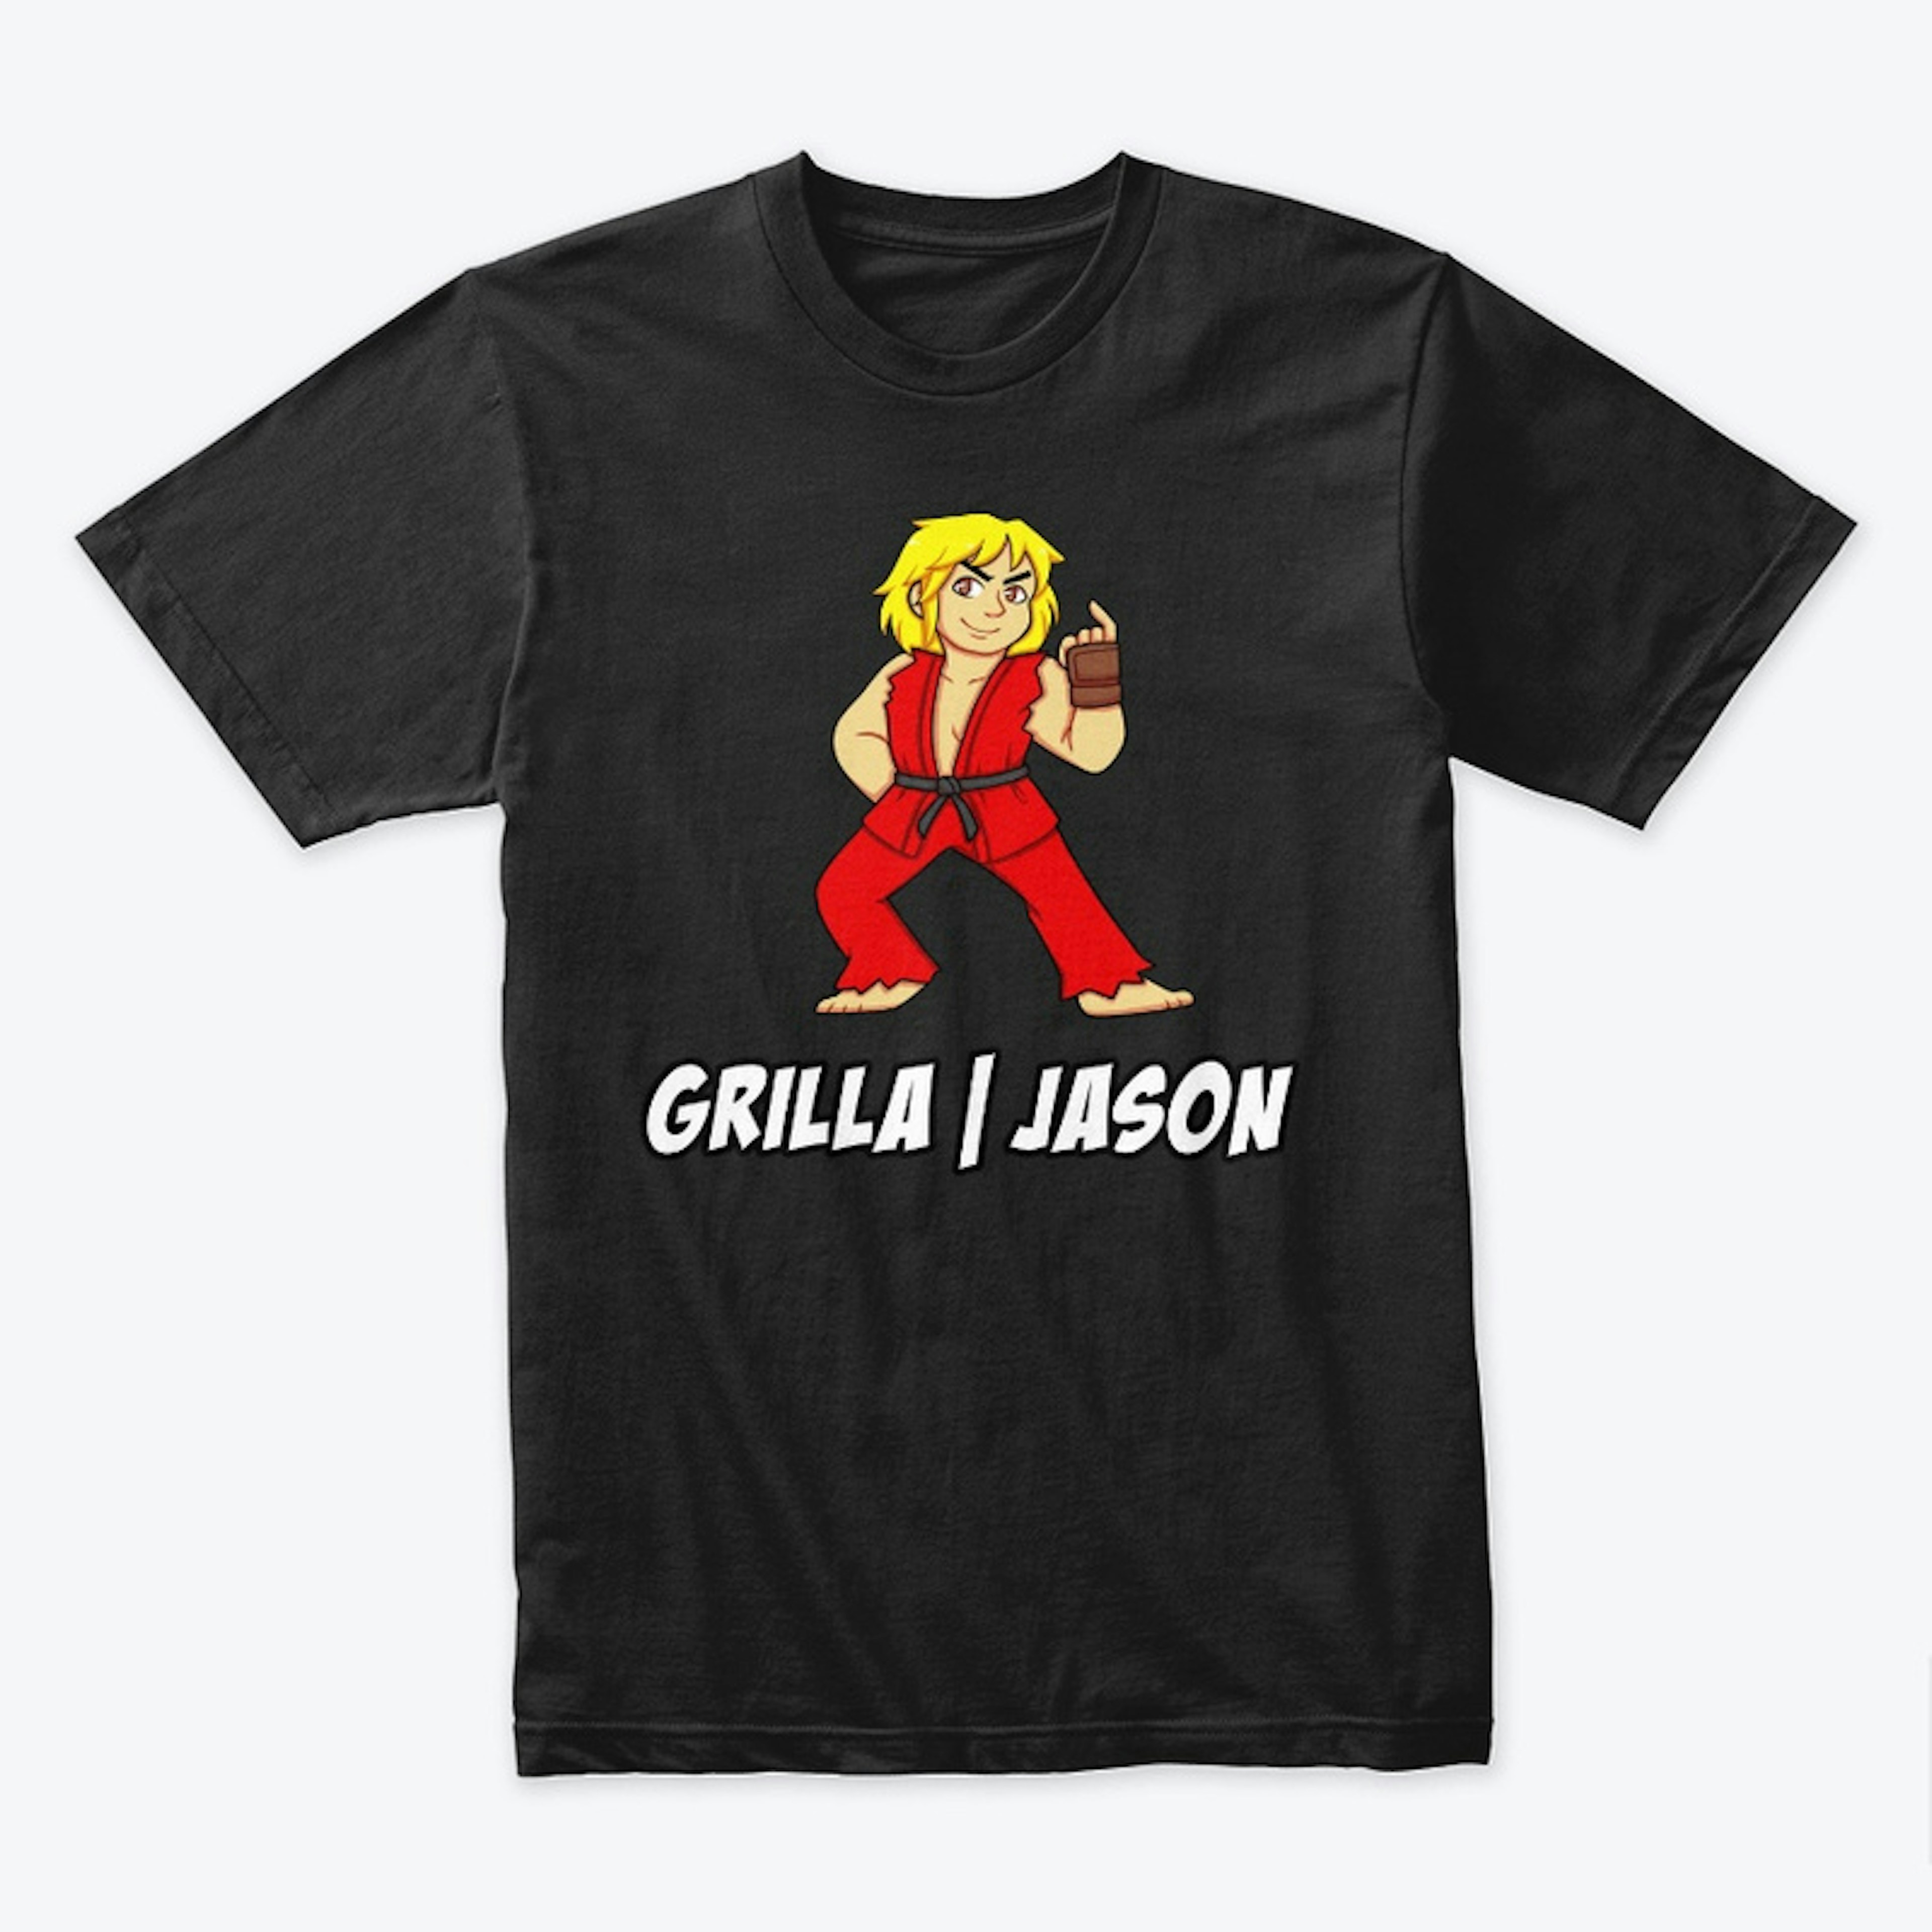 Grilla Jason